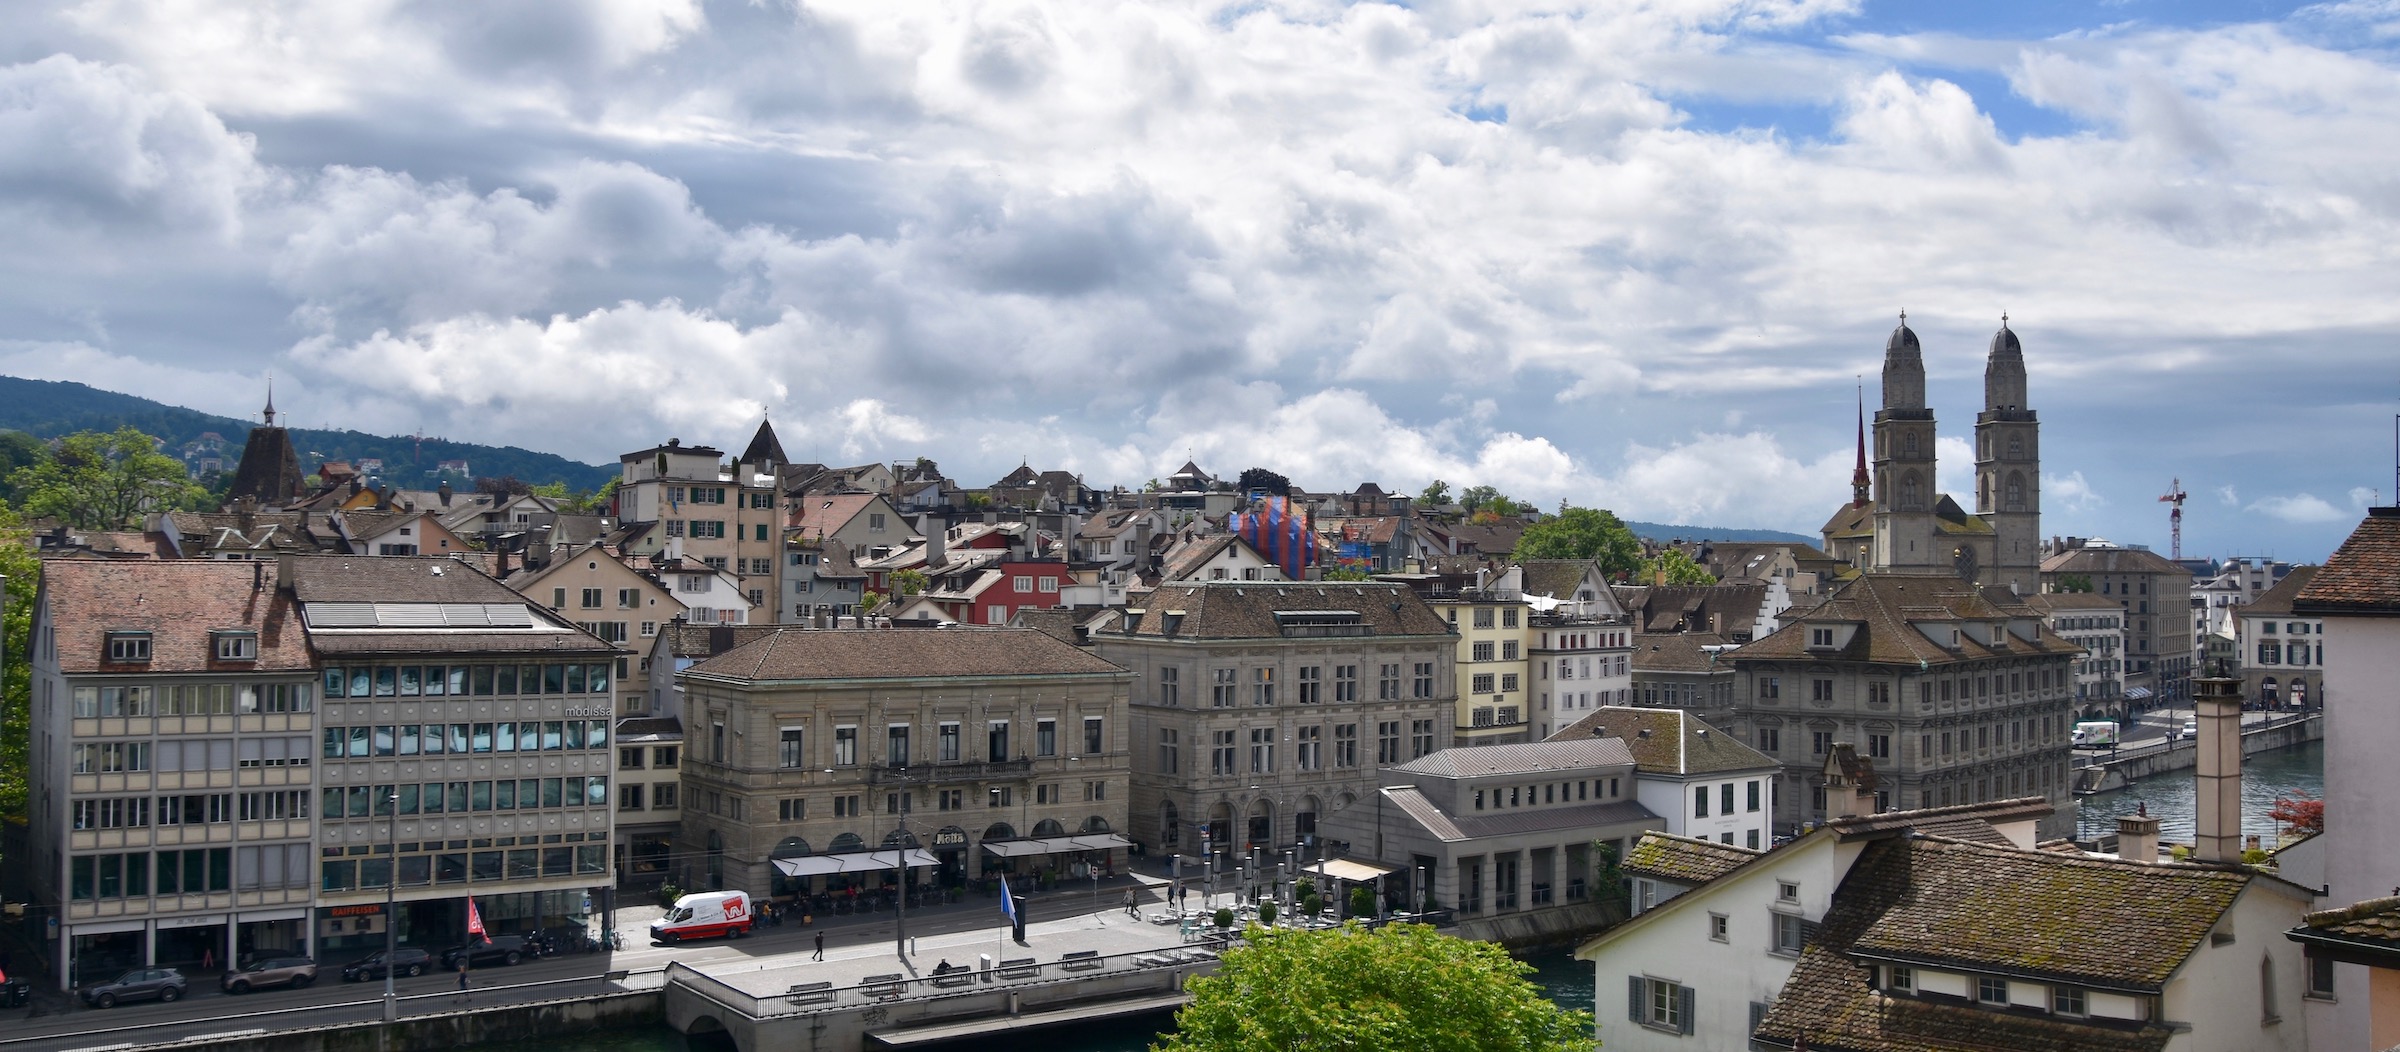 View of Grossmunster from the Lindenhof, Zurich